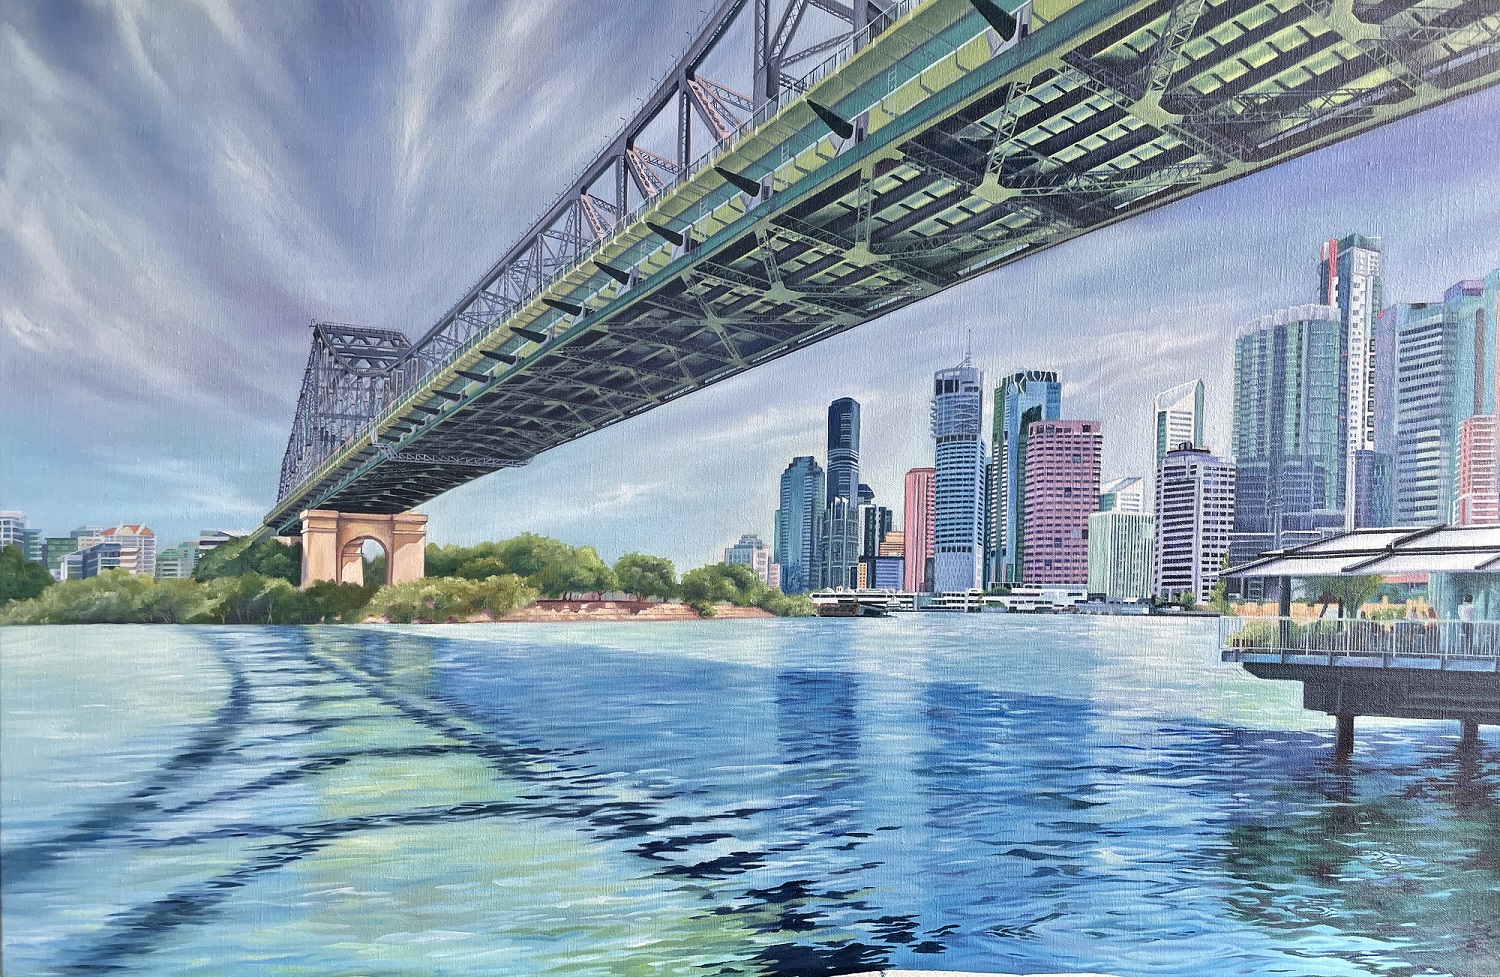 What's Your Brisbane Story? by Michelle Caitens | Lethbridge Landscape Prize 2021 Finalists | Lethbridge Gallery